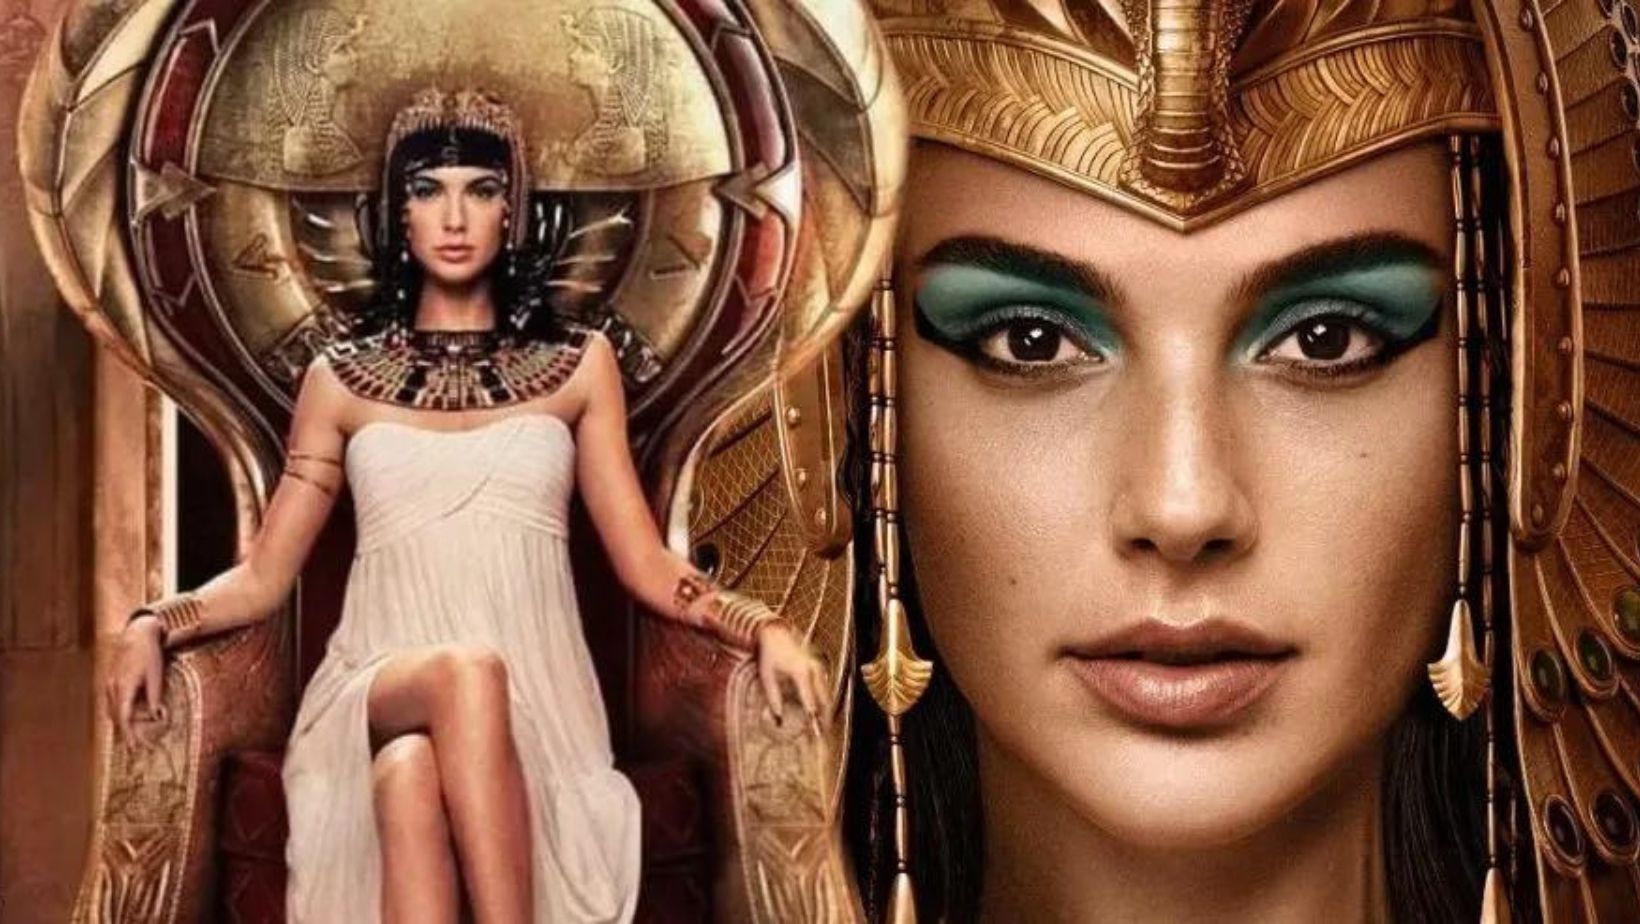 Cleopatra's Appearance